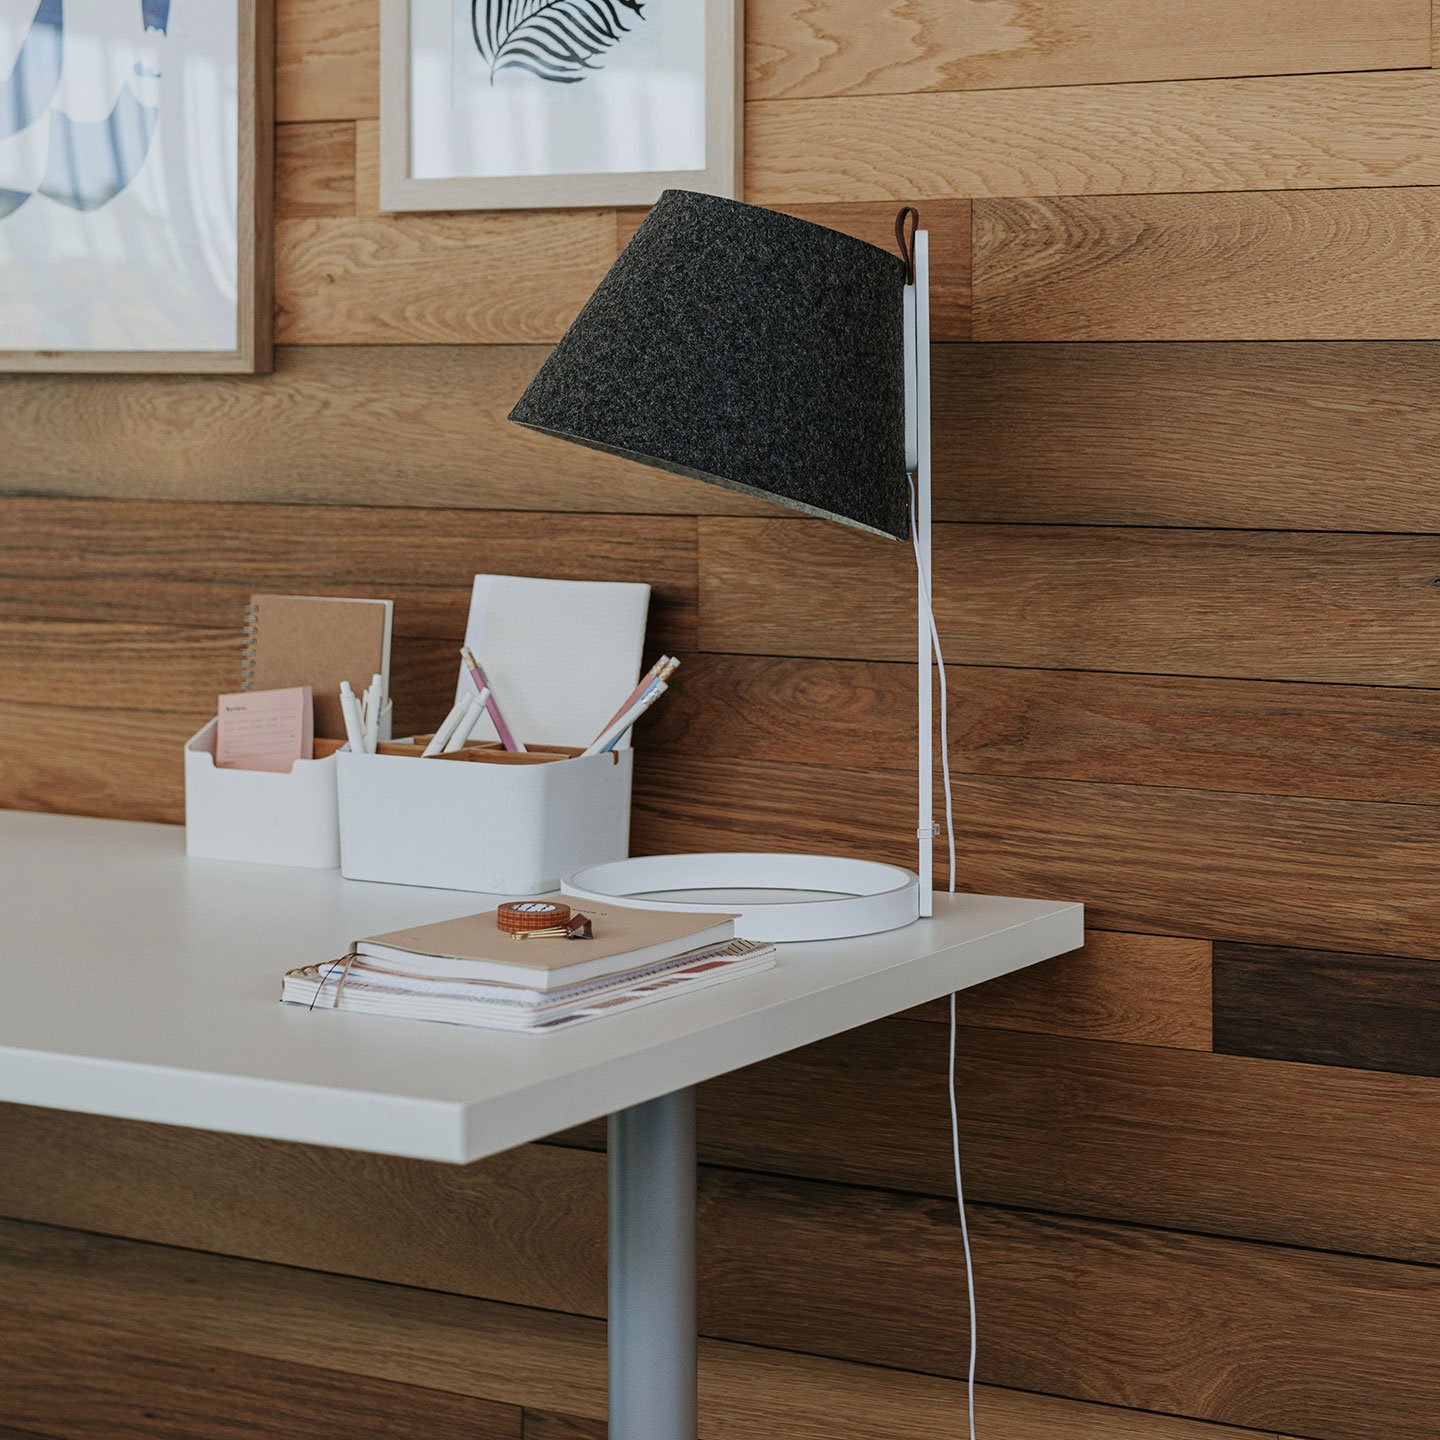 Haworth Lana Lighting desk lamp in black on white desk in office space